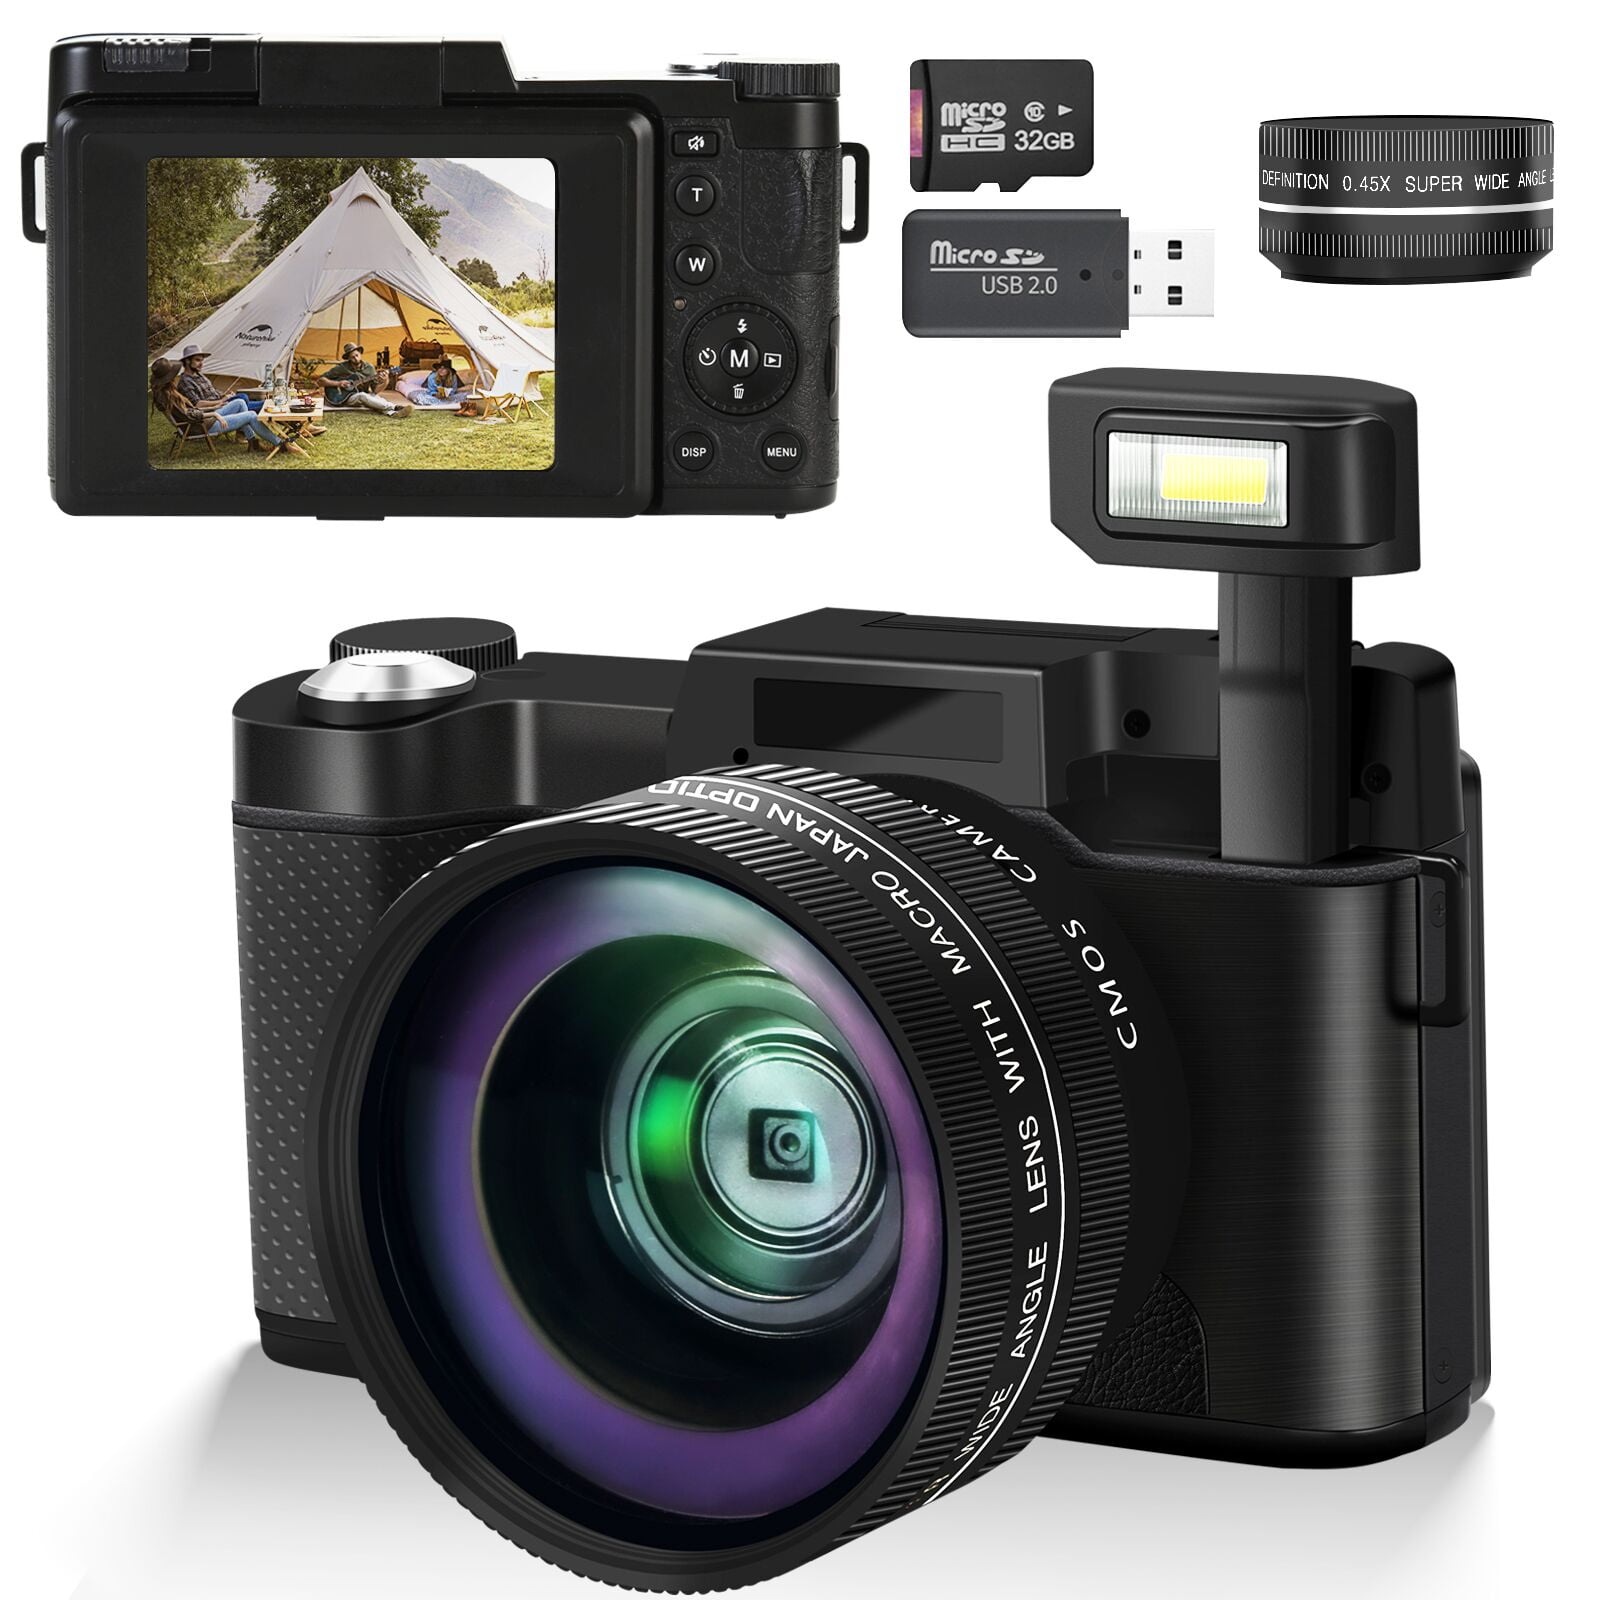 52mm 0.45X Super Wide Angle Lens W/ Macro for Nikon D3000 D7100 D7000 D90 D80 UK 